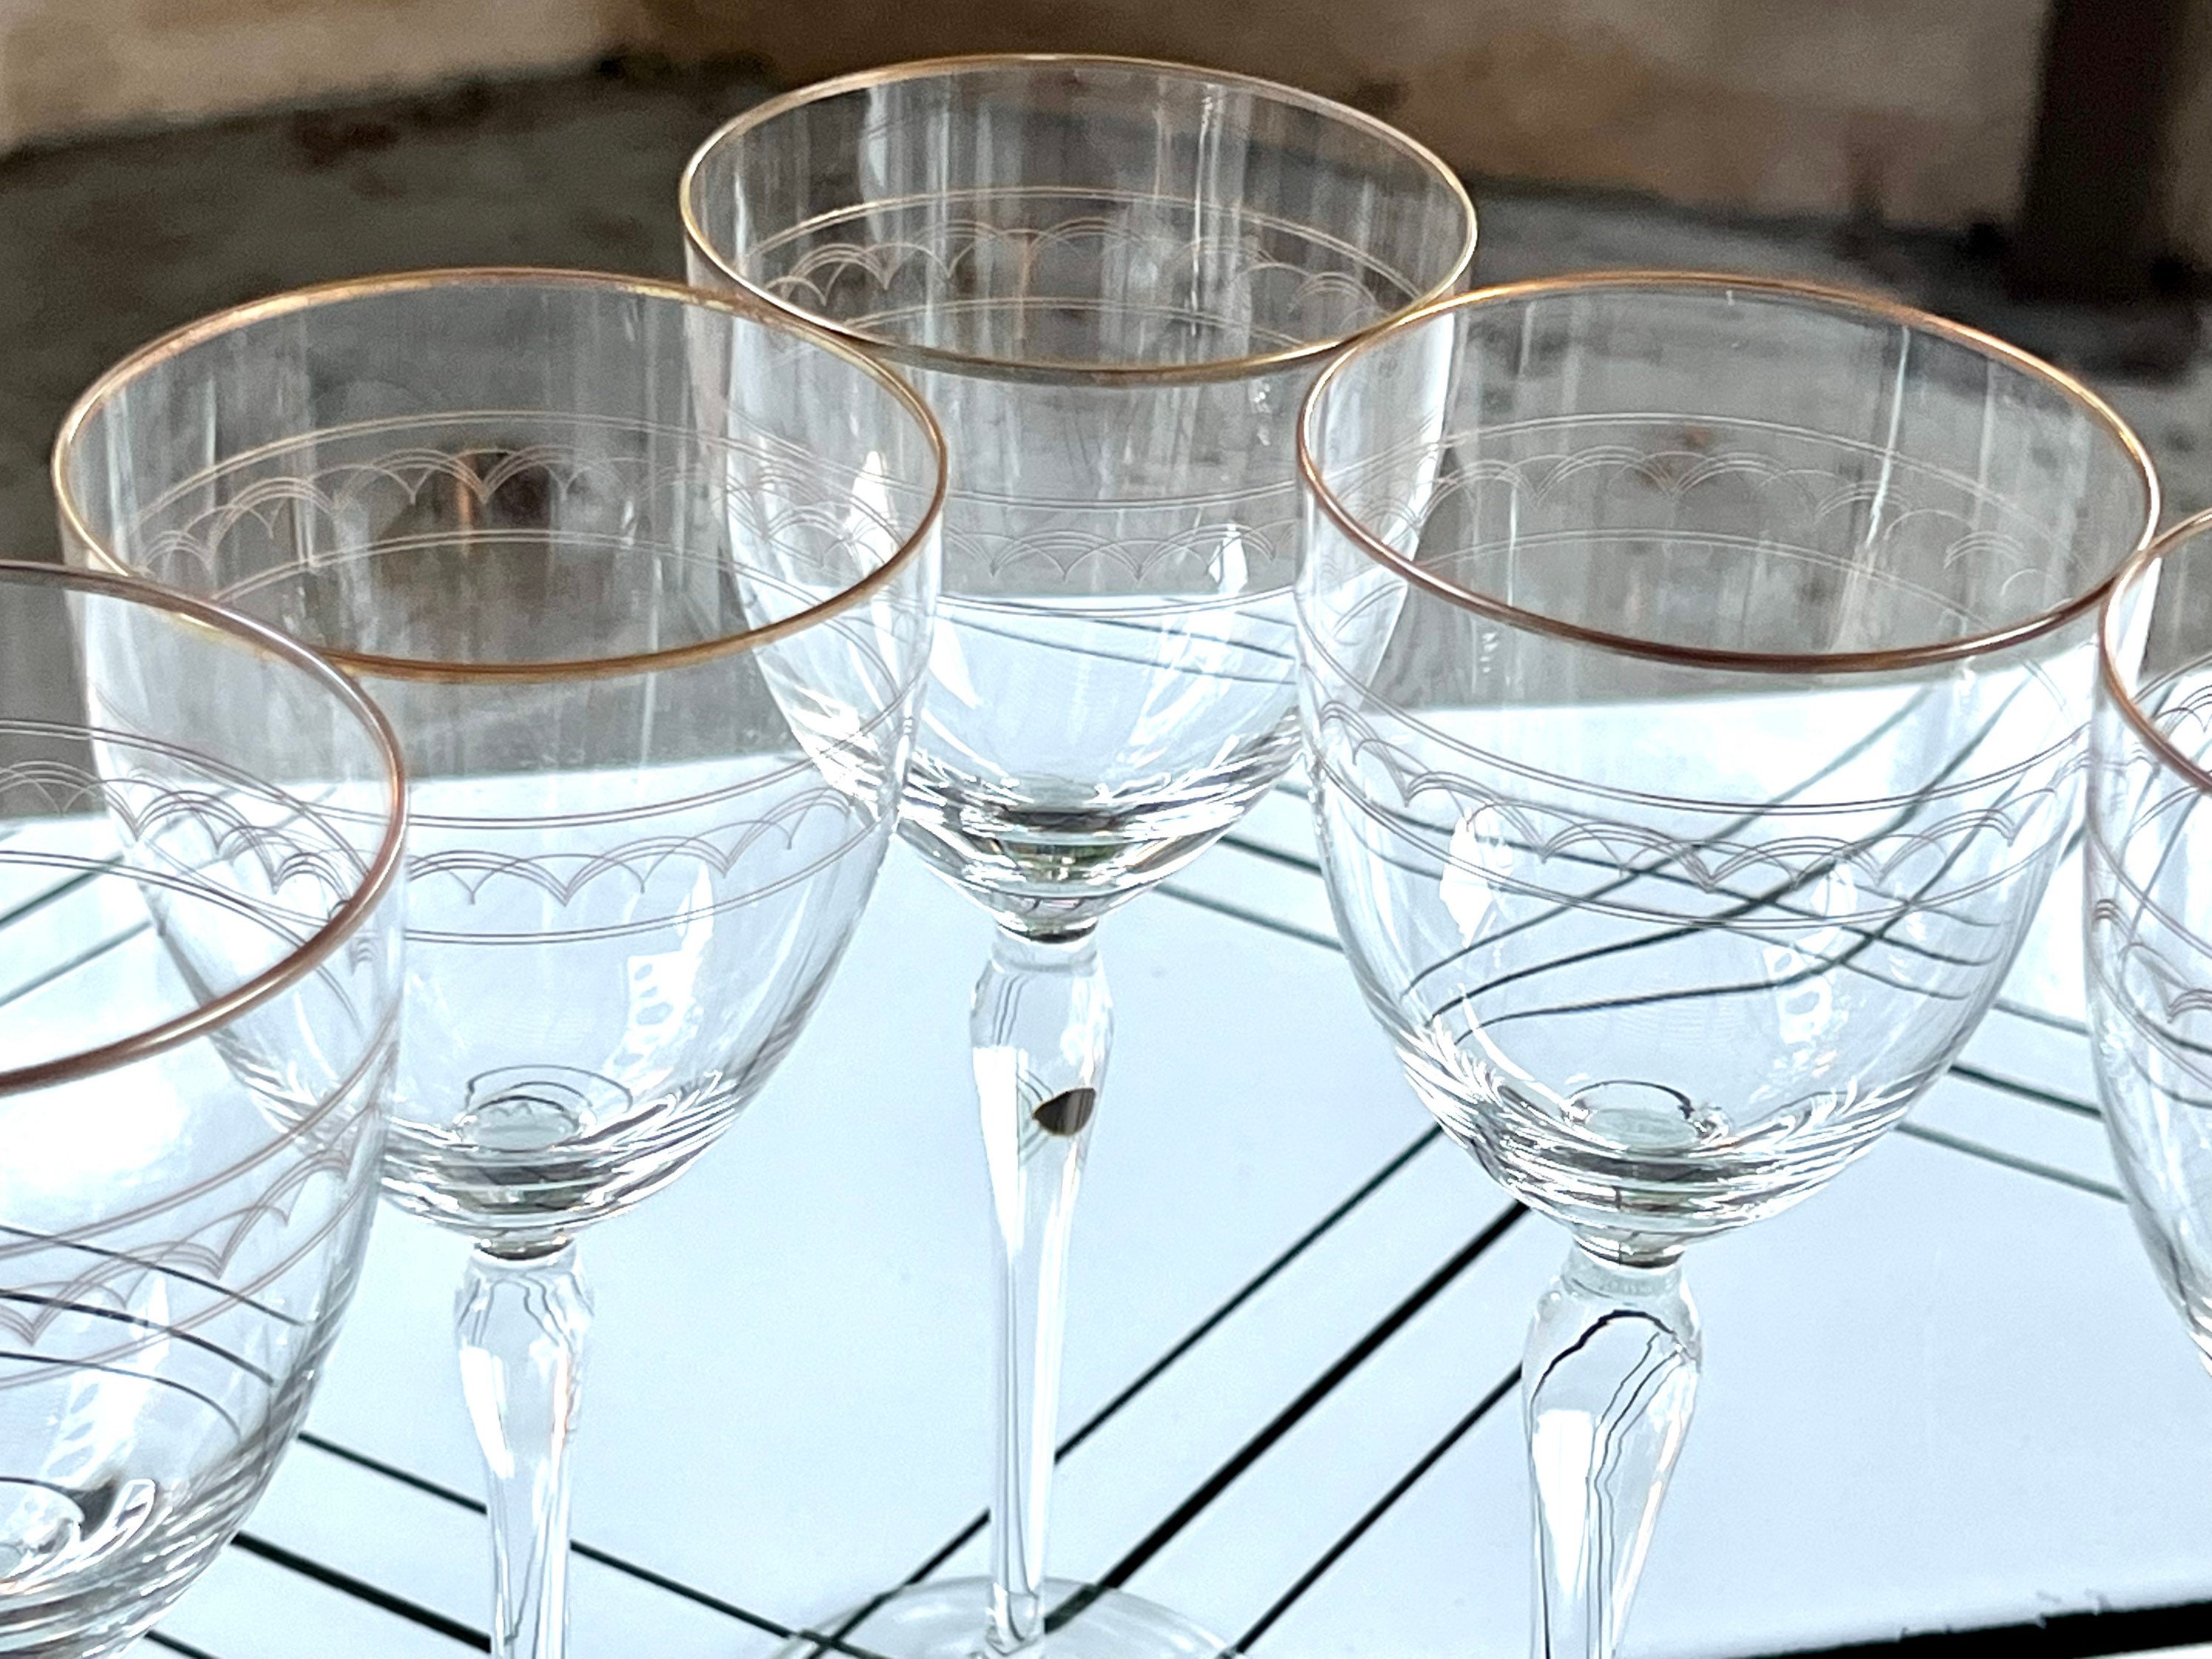 Brandy glass SPECIAL GLASSES BRANDY, set of 4 pcs, 558 ml, Spiegelau